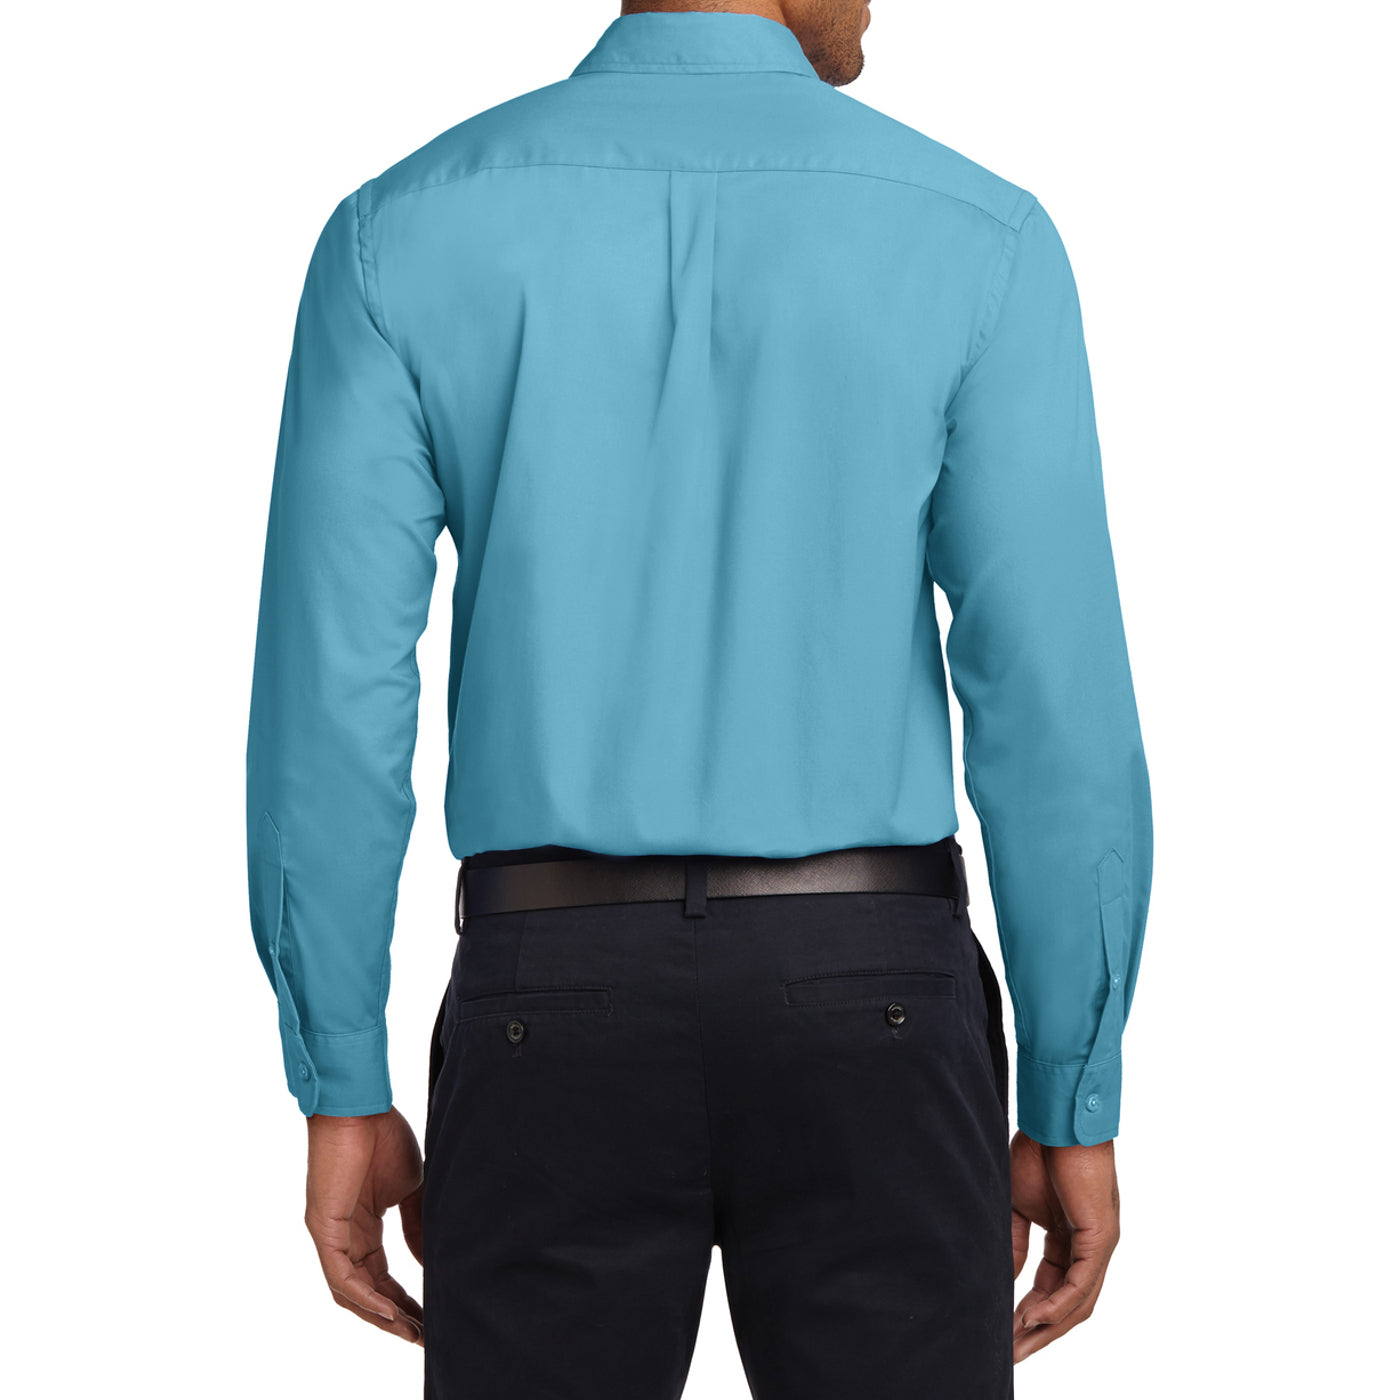 Men's Long Sleeve Easy Care Shirt - Maui Blue - Back